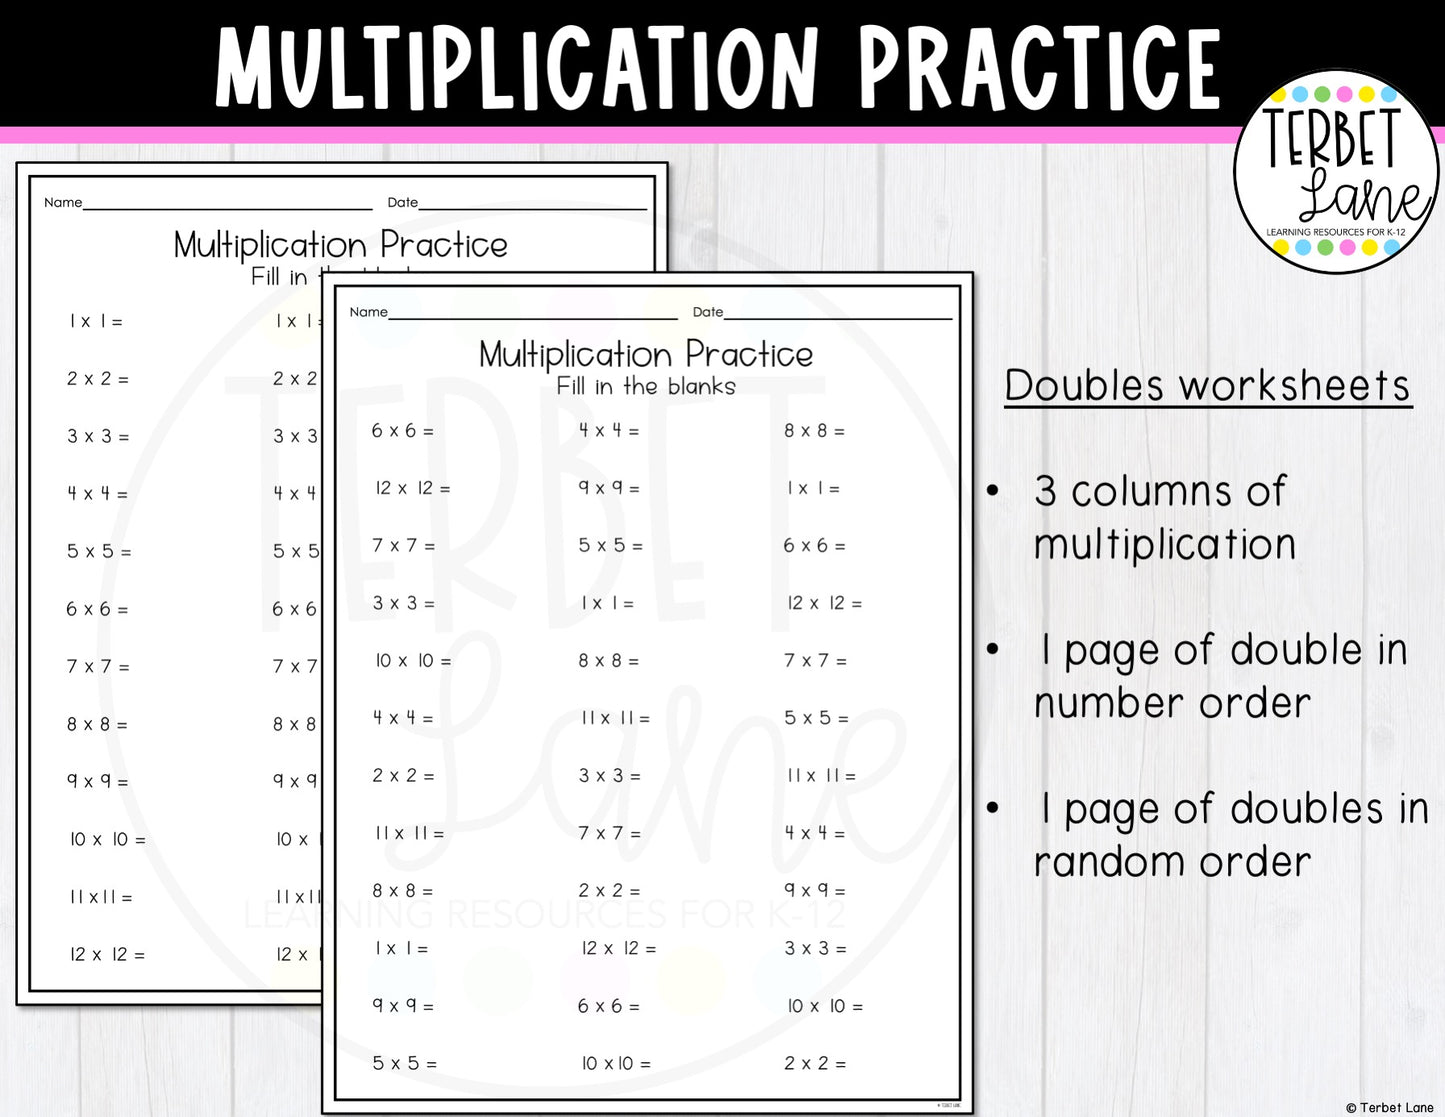 Multiplication and Division Practice Worksheet Bundle